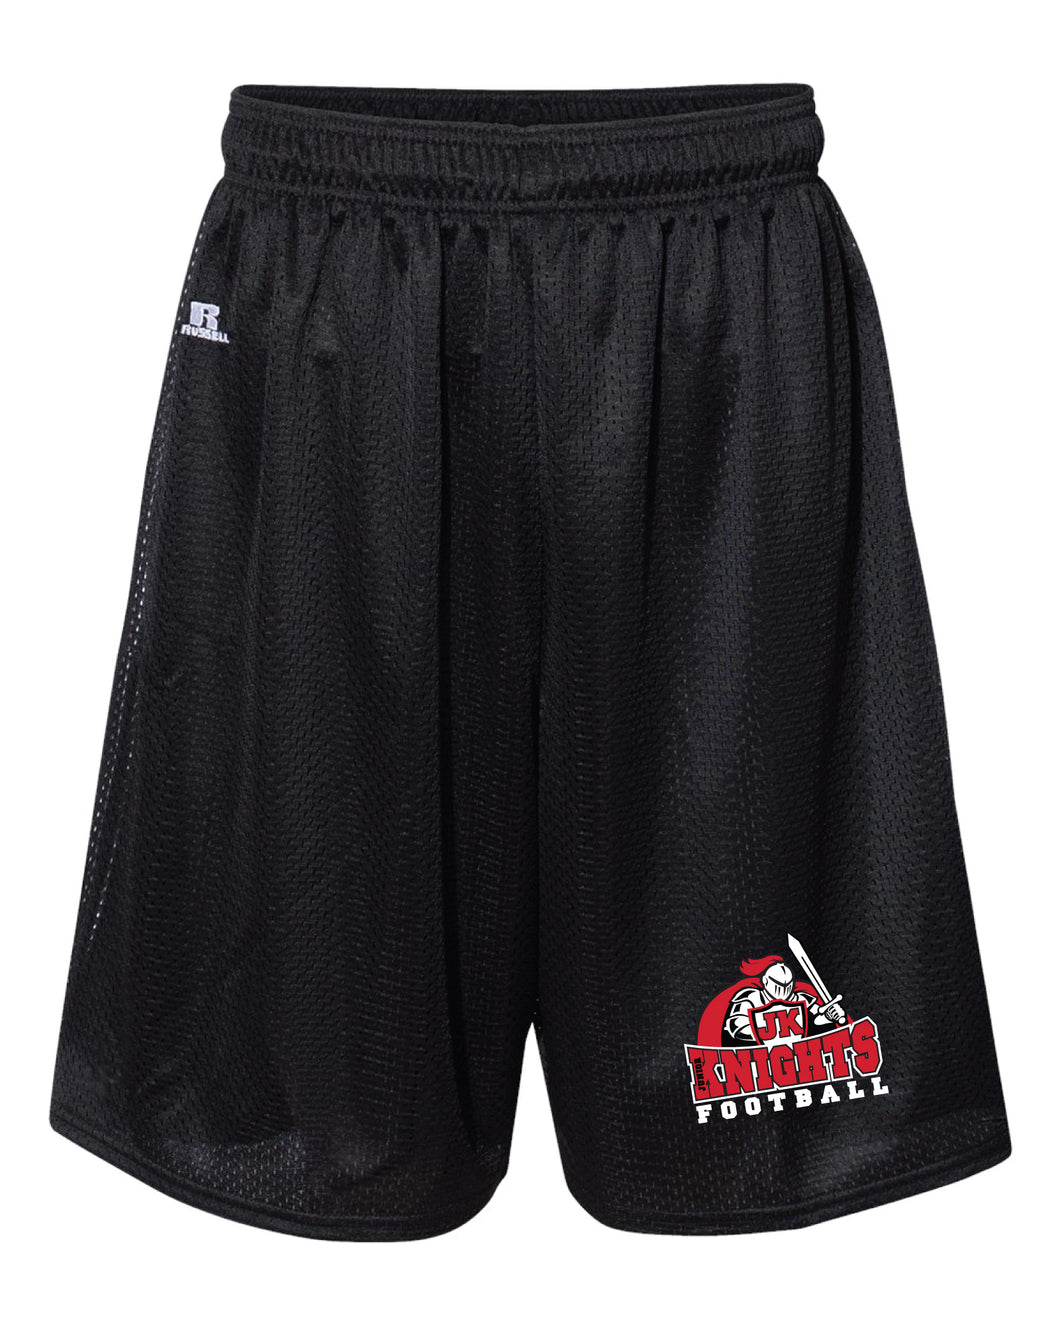 Wharton Football Russell Athletic Tech Shorts - Black - 5KounT